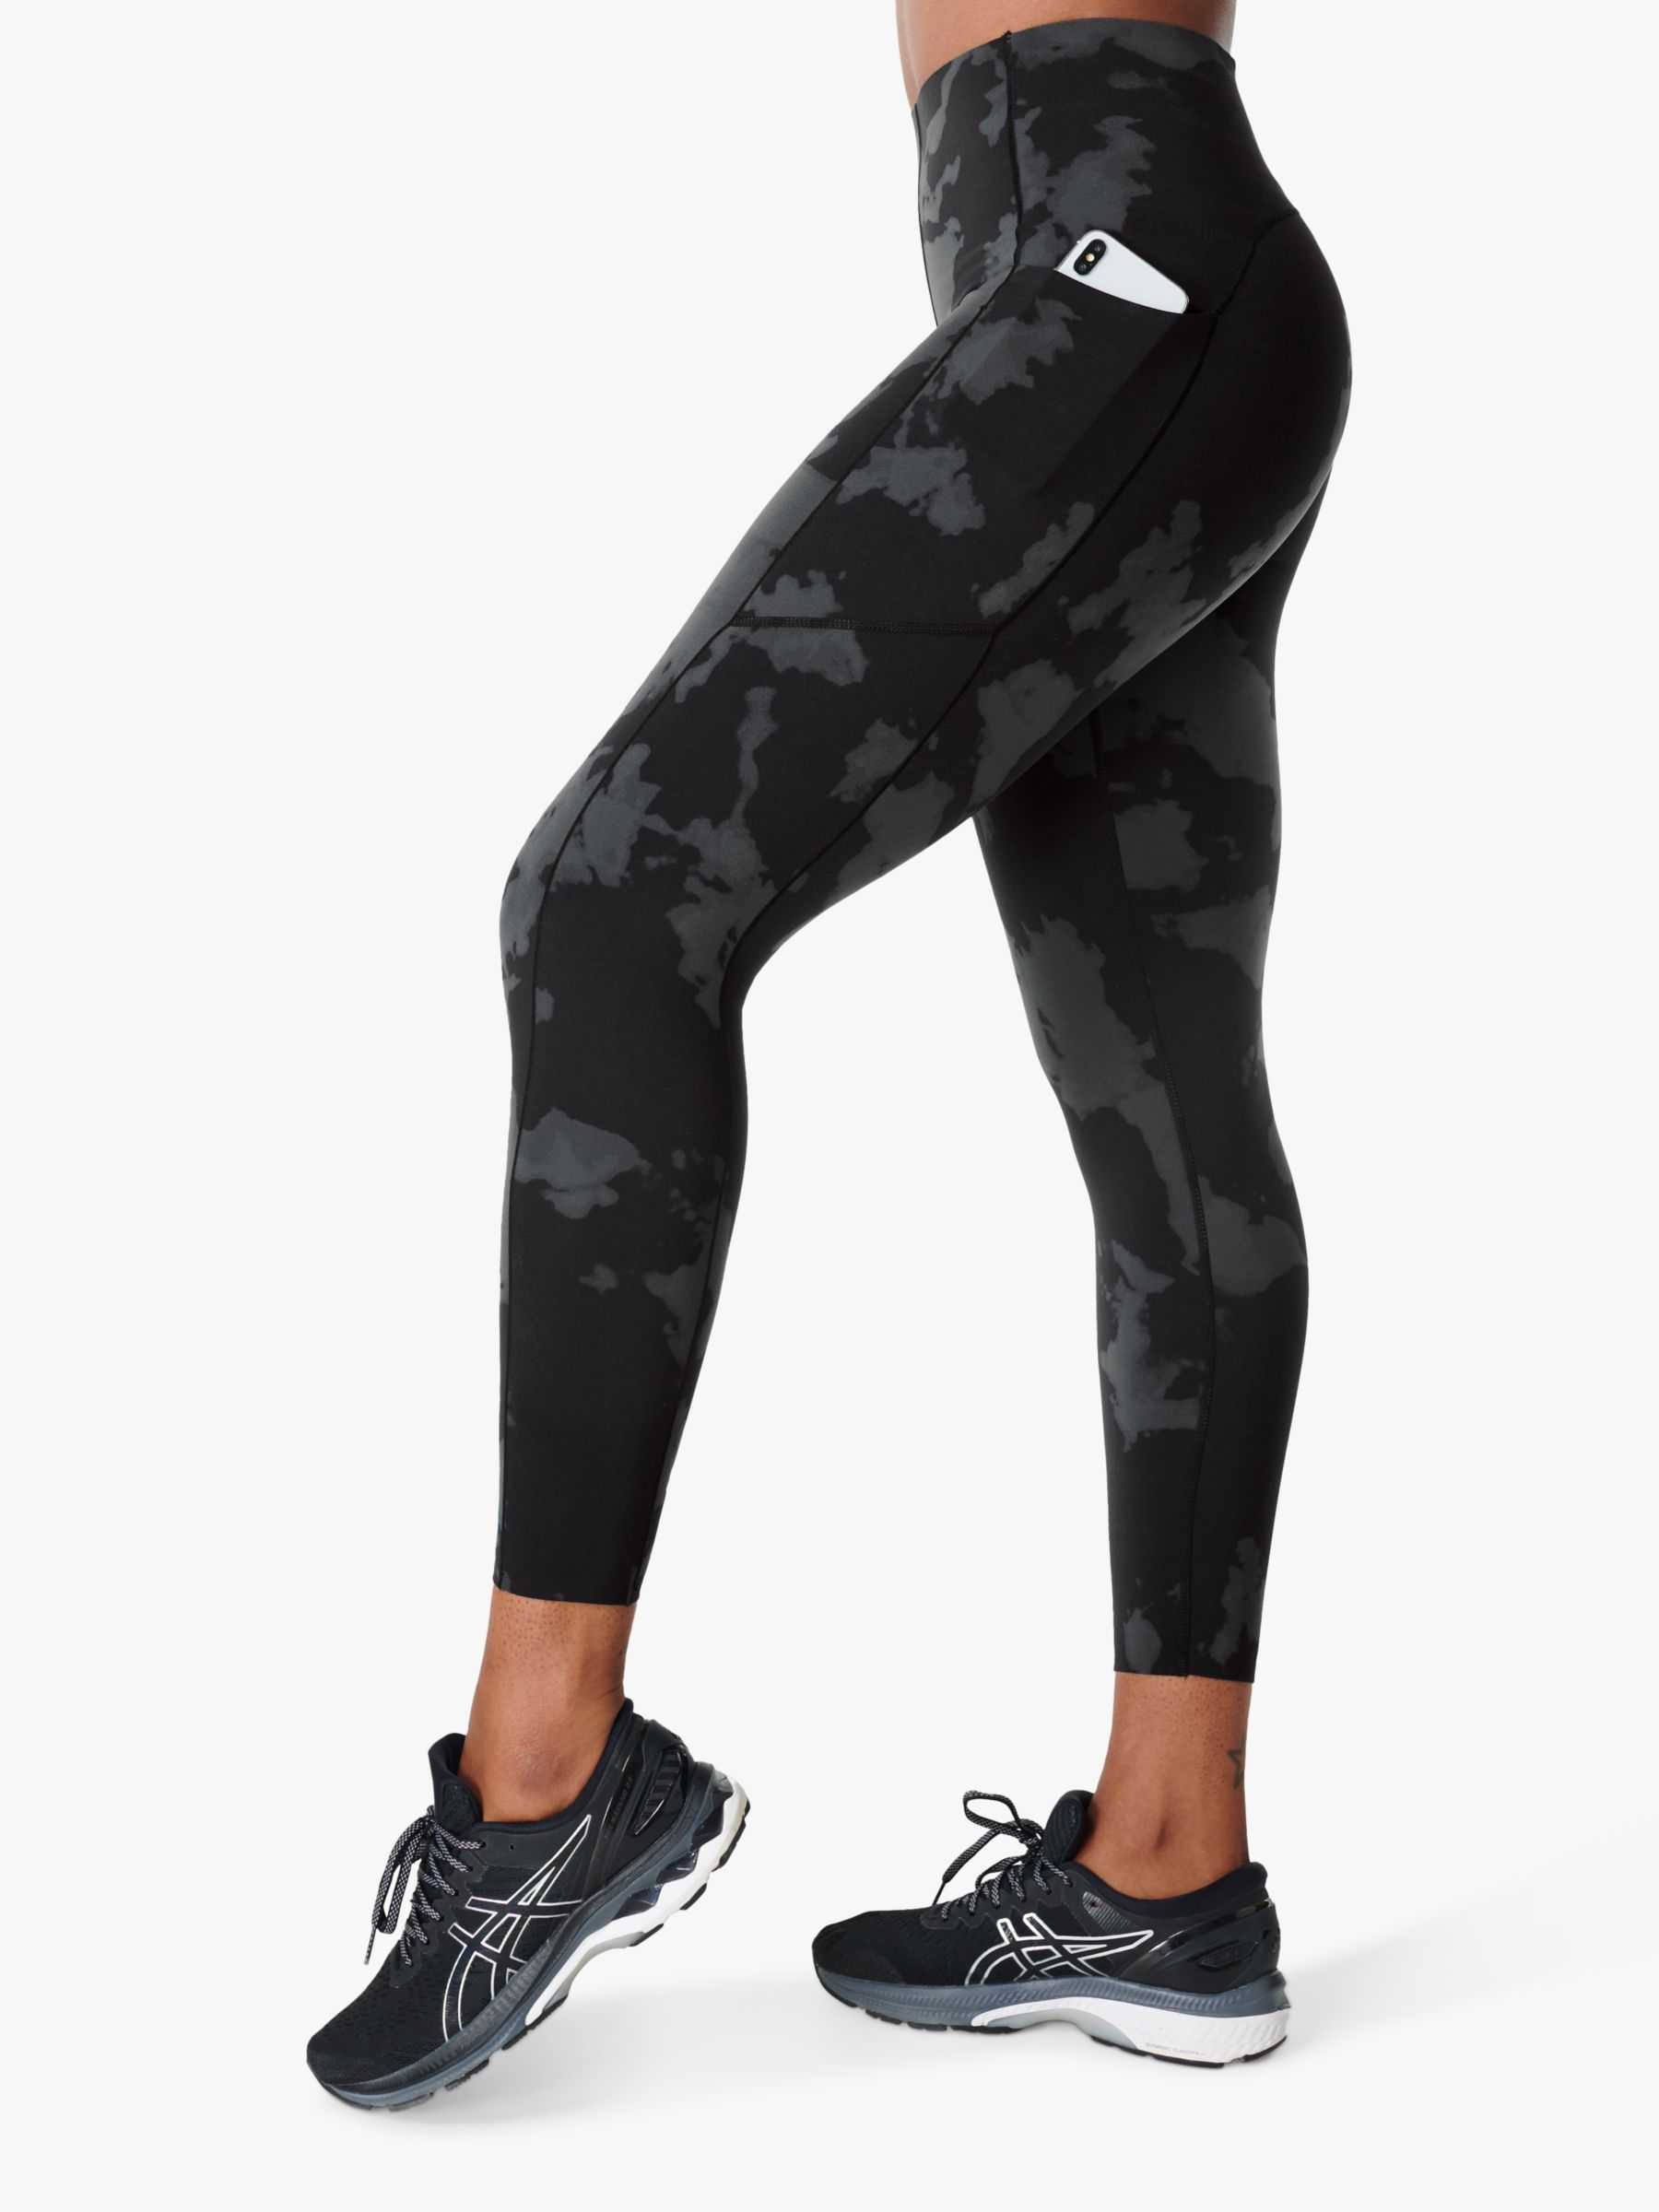 Power UltraSculpt High-Waisted 7/8 Gym Leggings - Black Fade Print